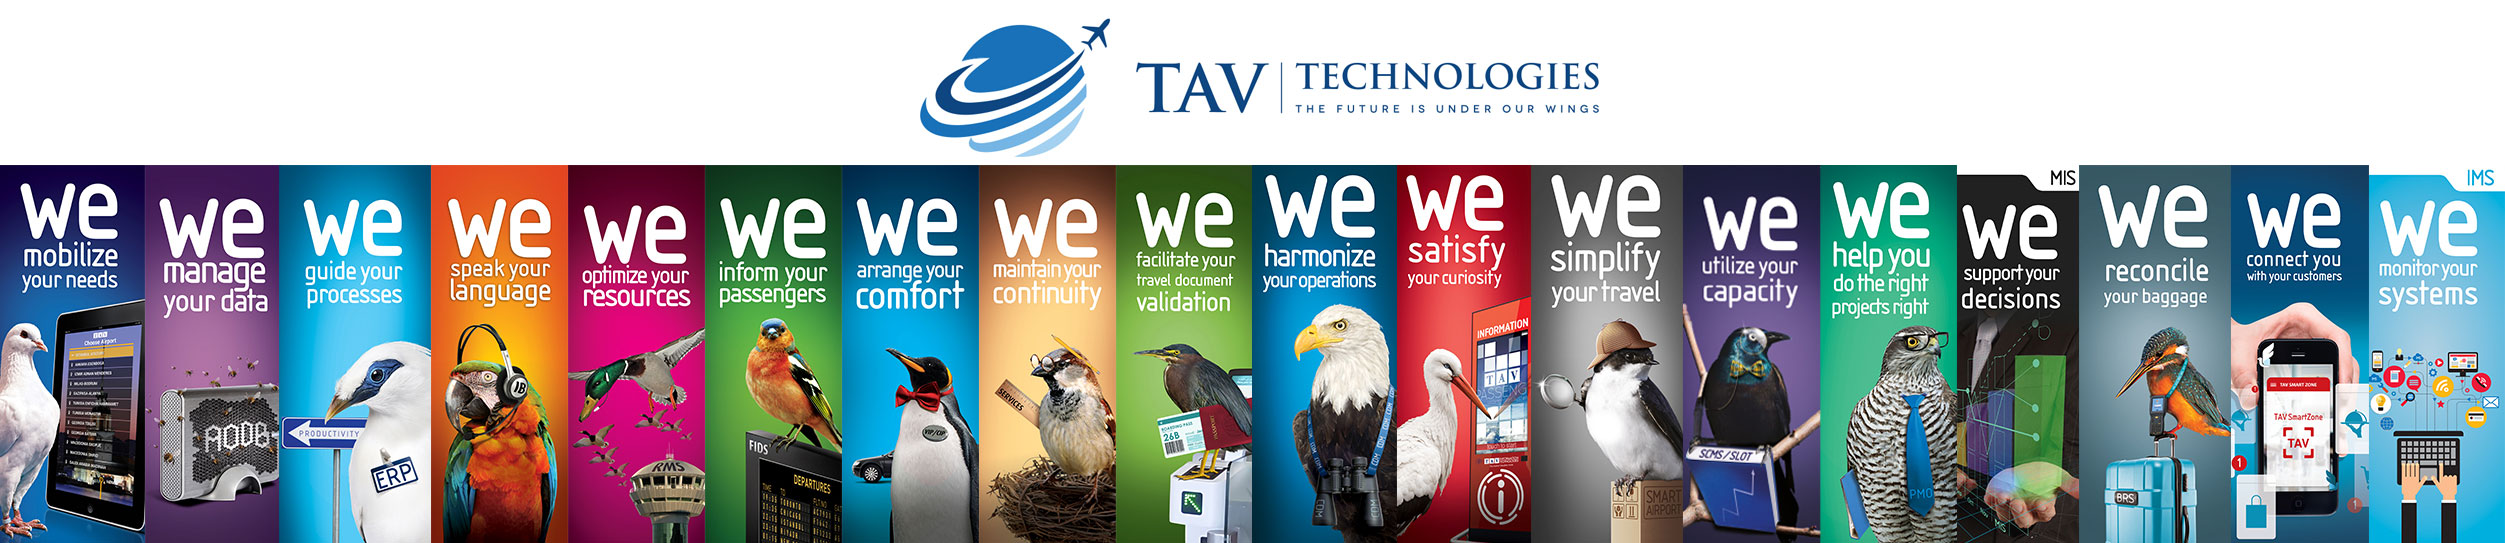 TAV Technologies Hakkında